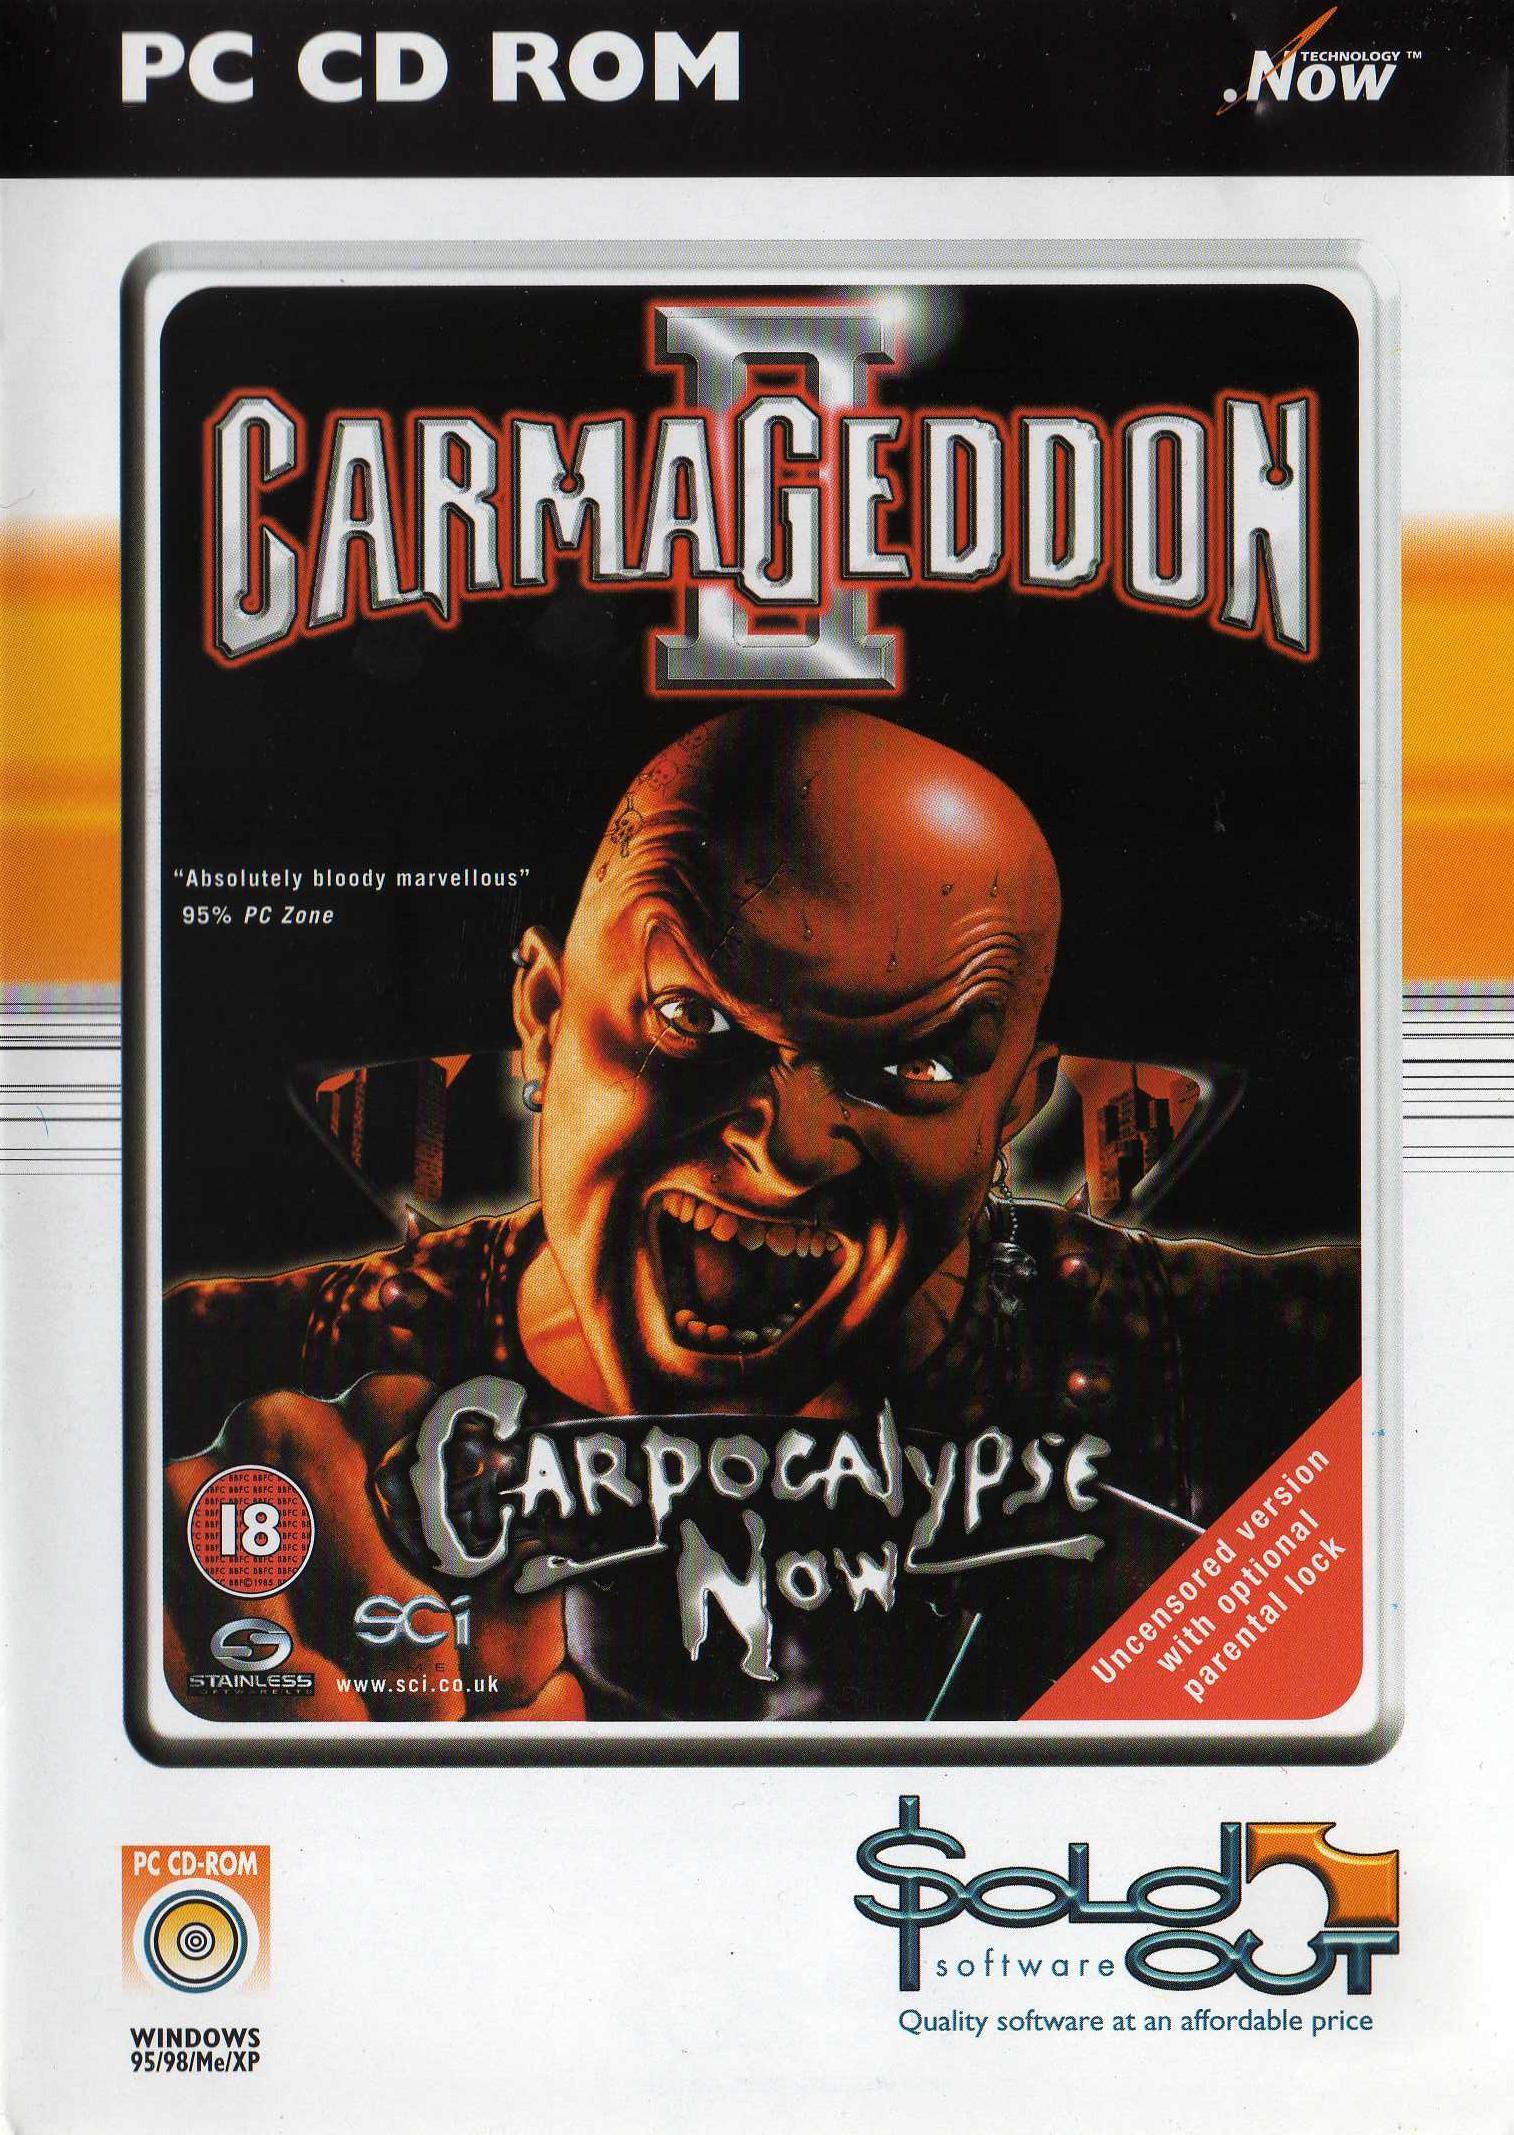 carmageddon-2-carpocalypse-now-details-launchbox-games-database